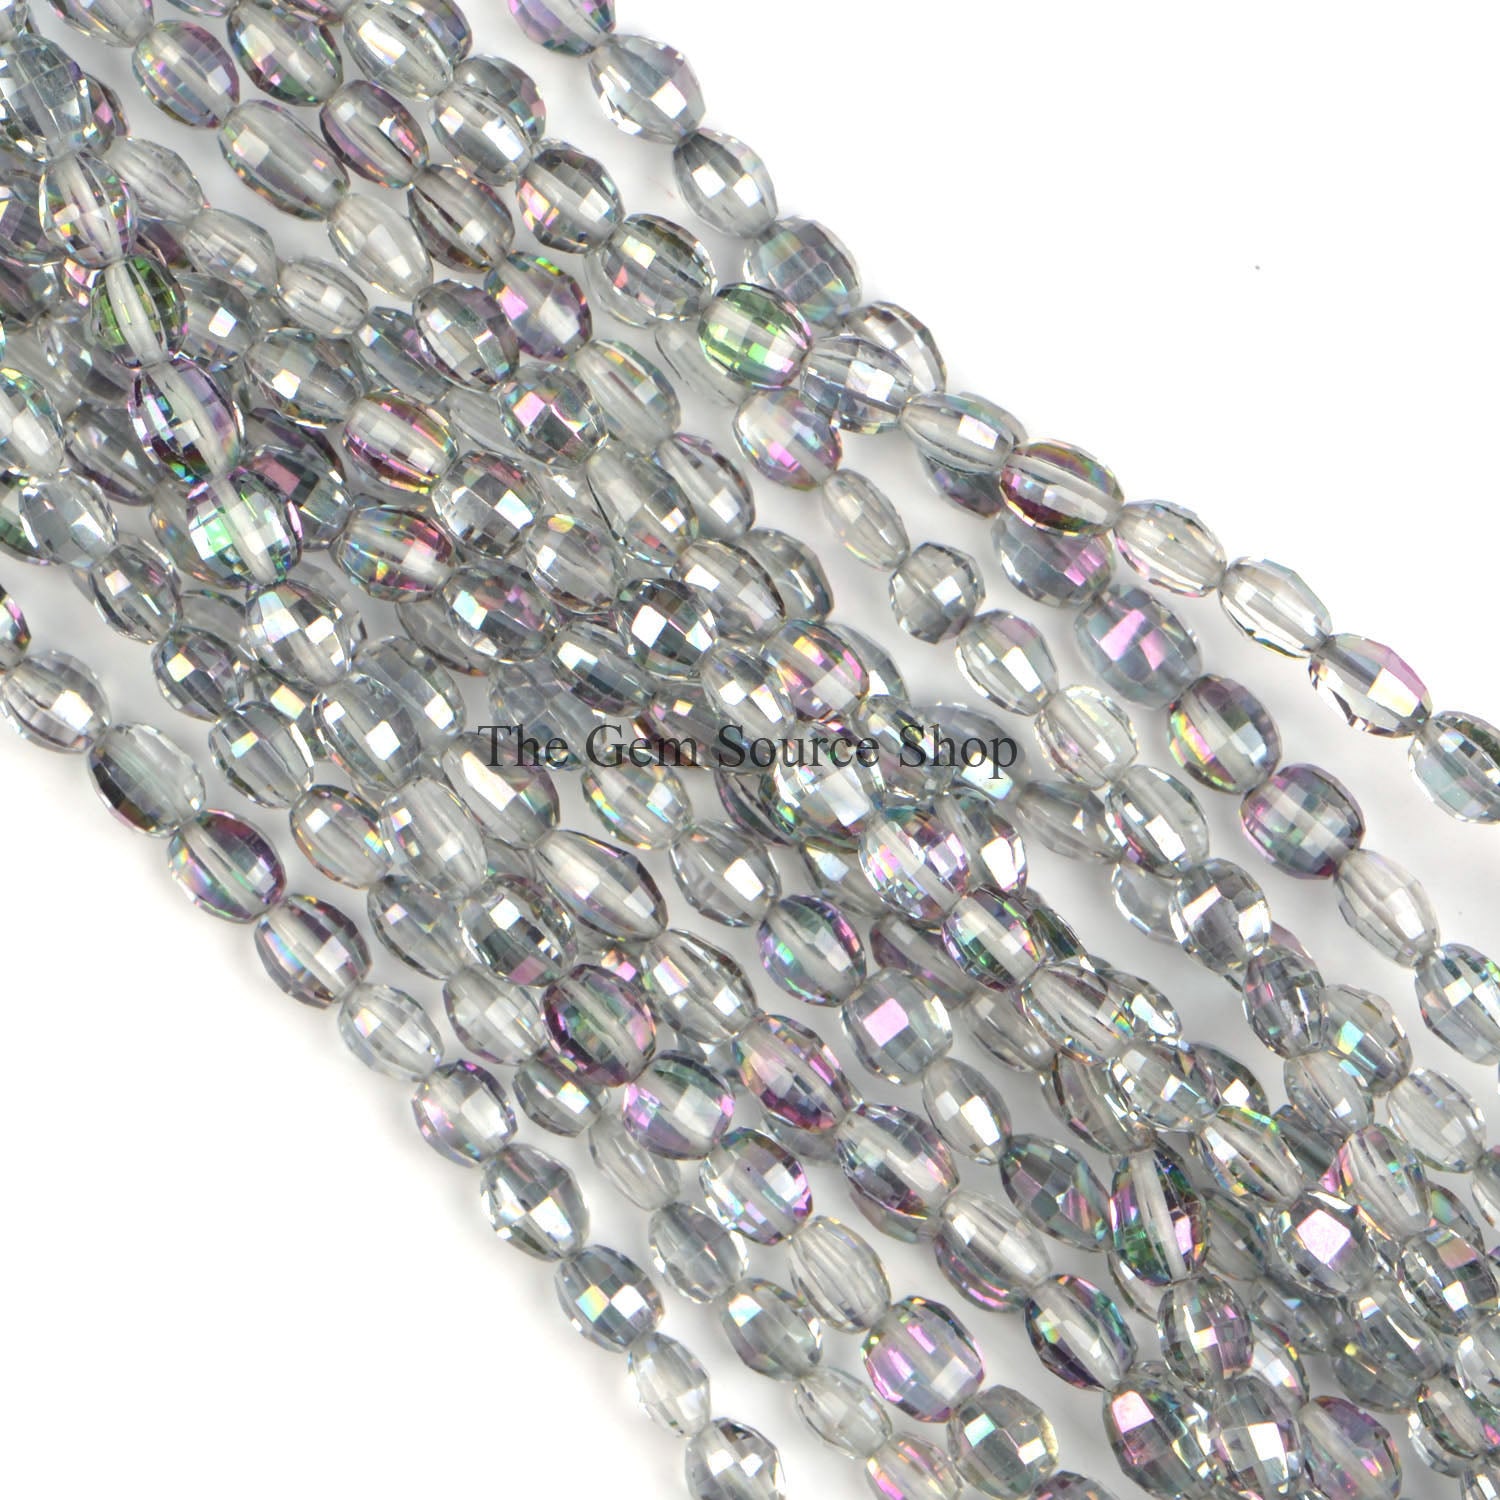 Mystic Topaz Beads, Mystic Topaz Oval Shape Beads, Mystic Topaz Faceted Beads, Mystic Topaz Gemstone Beads